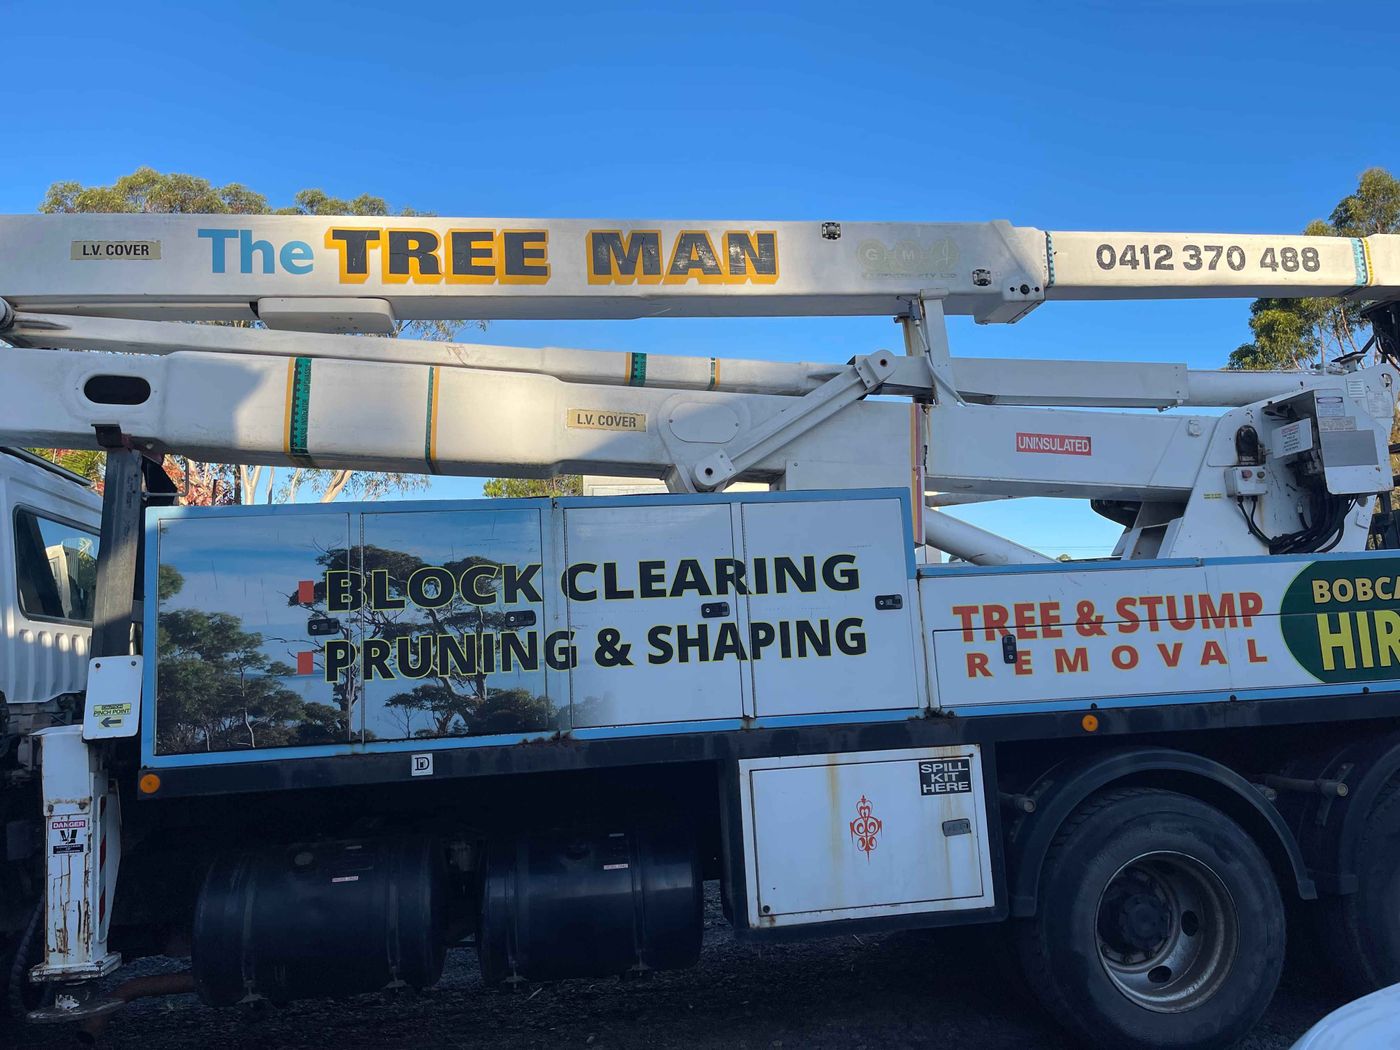 The Tree Man image